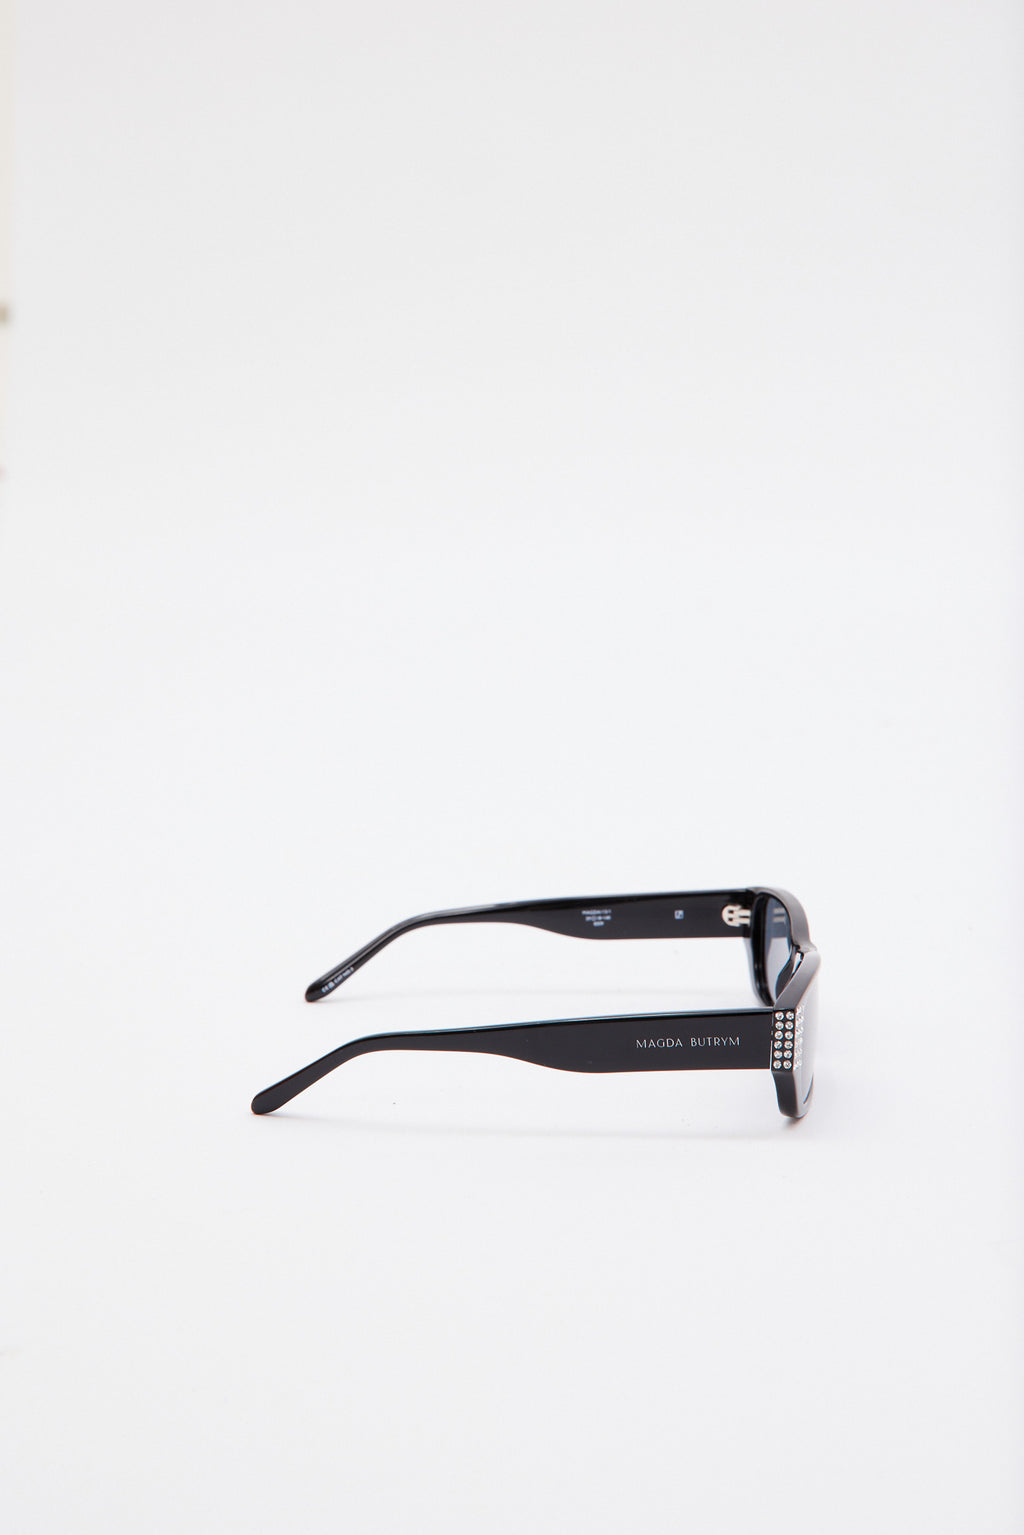 Rectangle Black Grey Crystal Sunglasses